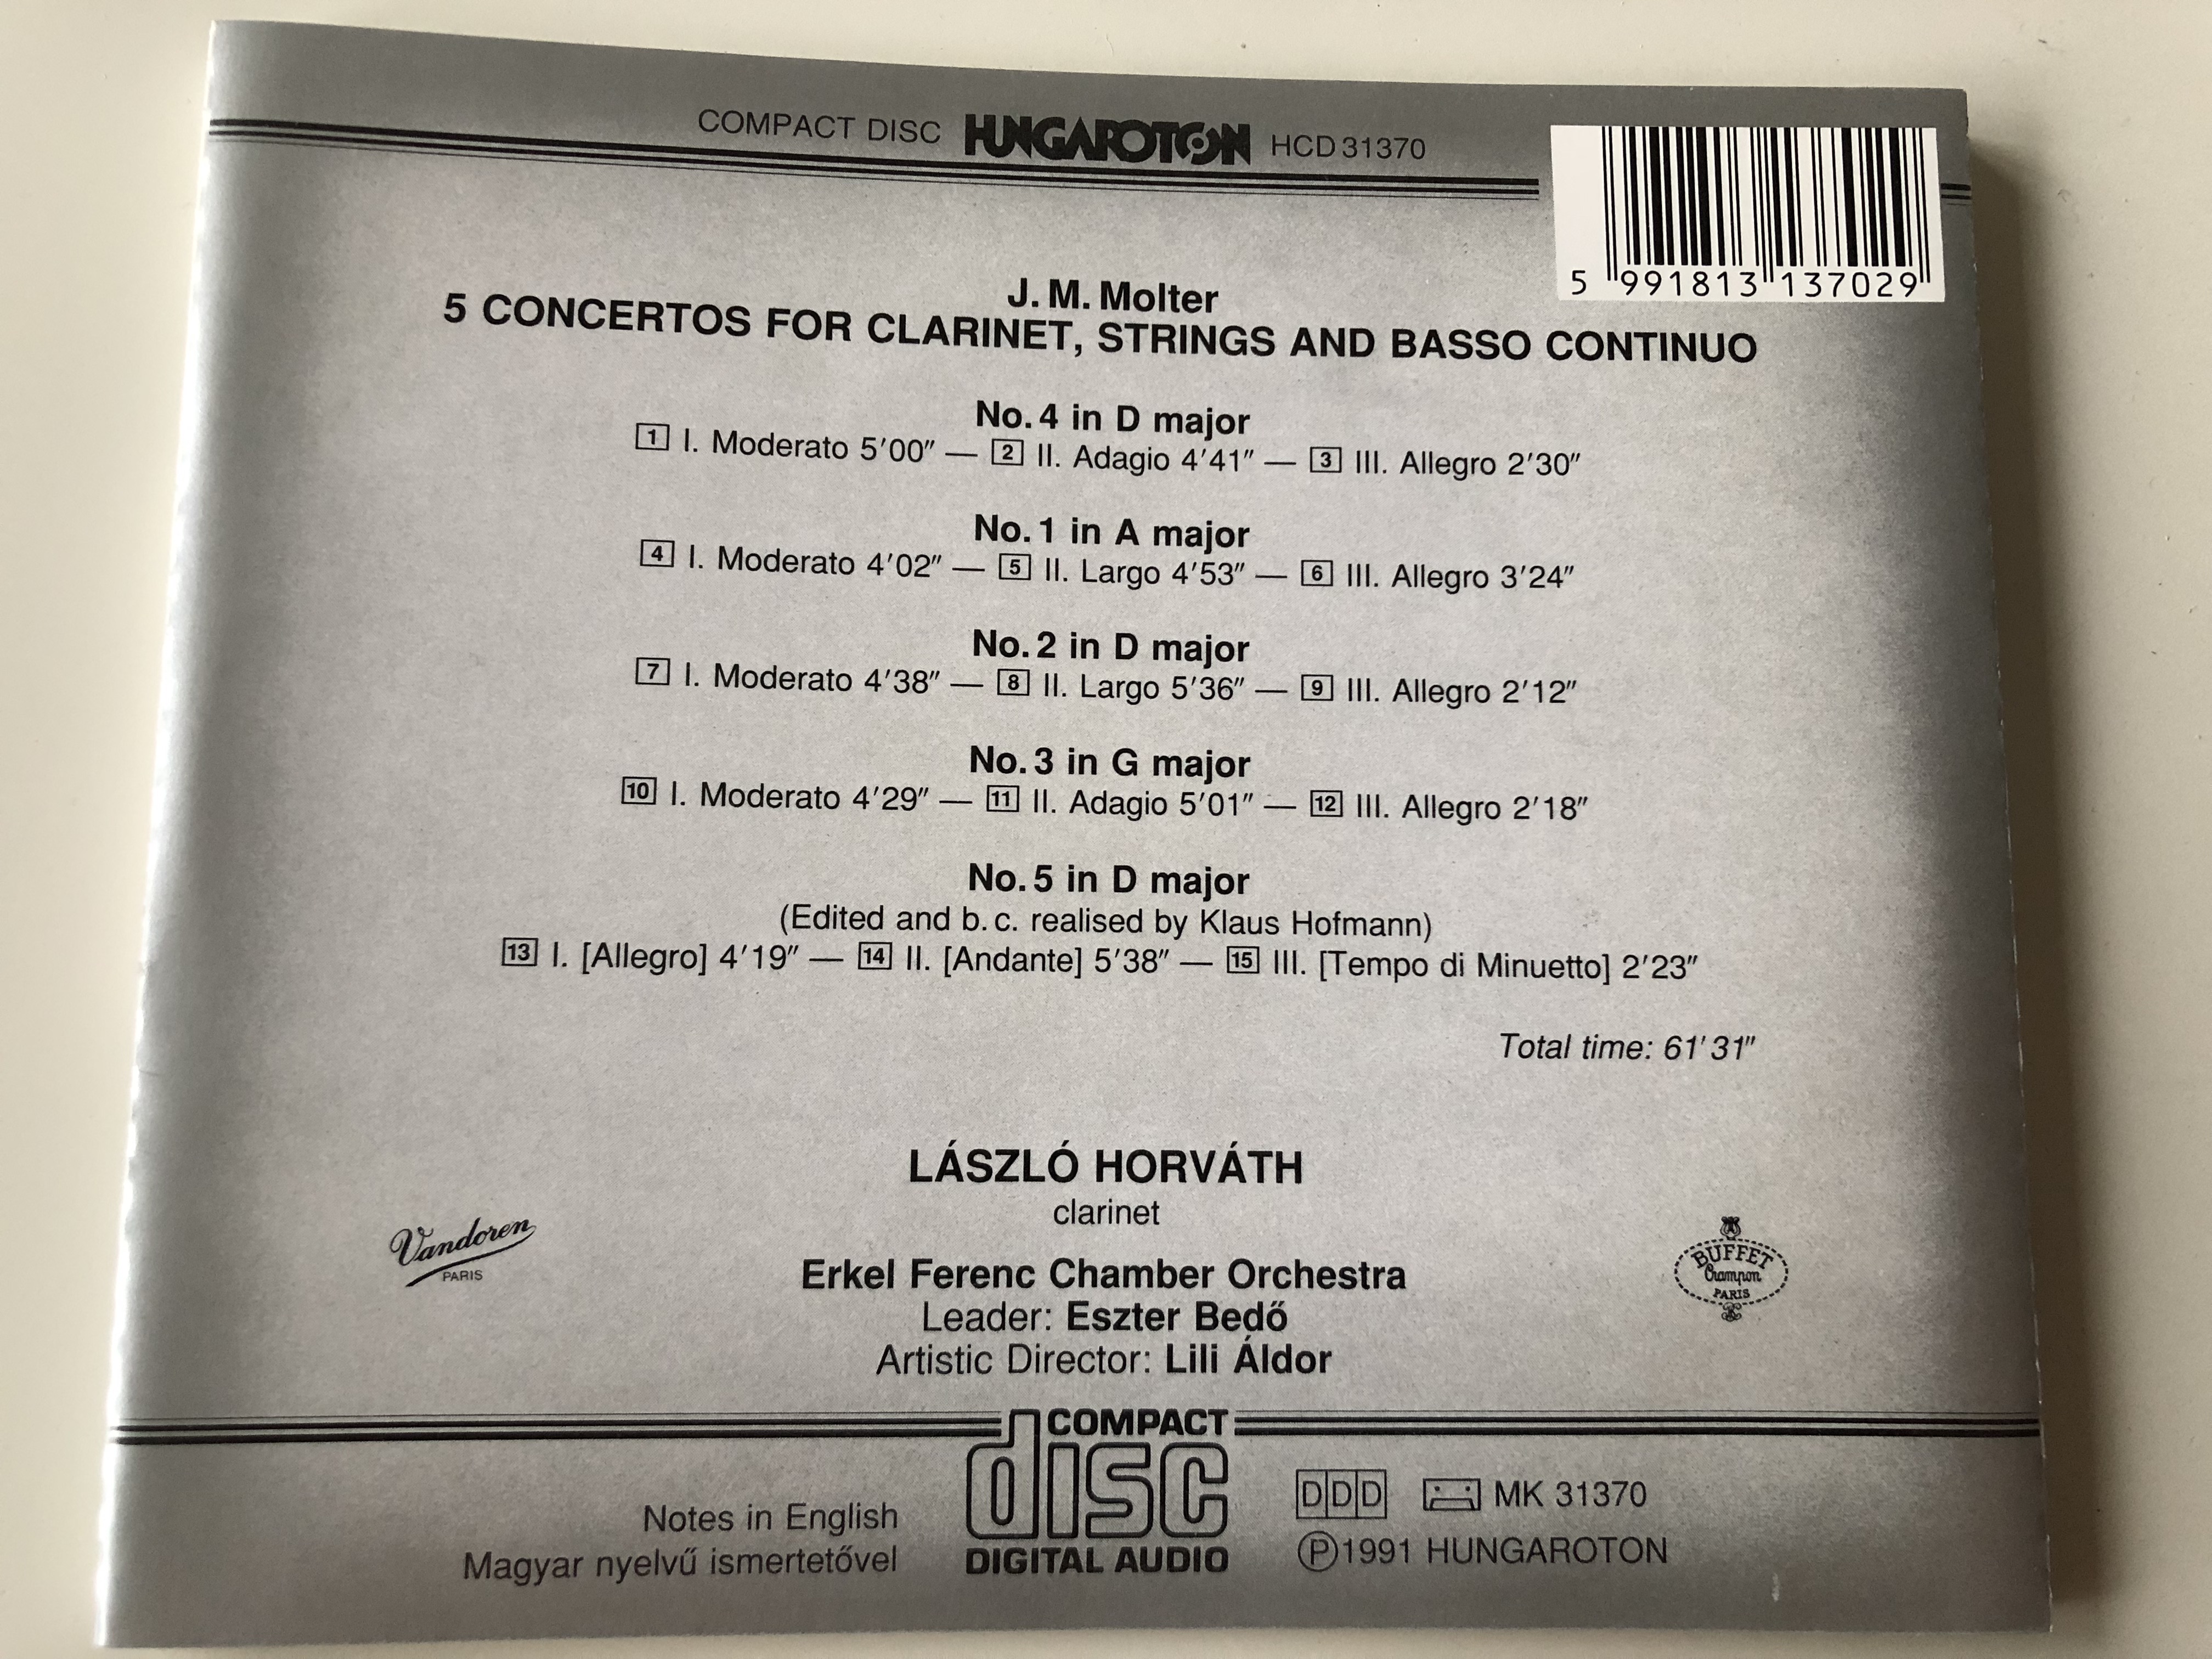 j.-m.-molter-5-concertos-the-birth-of-the-clarinetto-l-szl-horv-th-erkel-ferenc-chamber-orchestra-hungaroton-audio-cd-1991-hcd-31370-6-.jpg